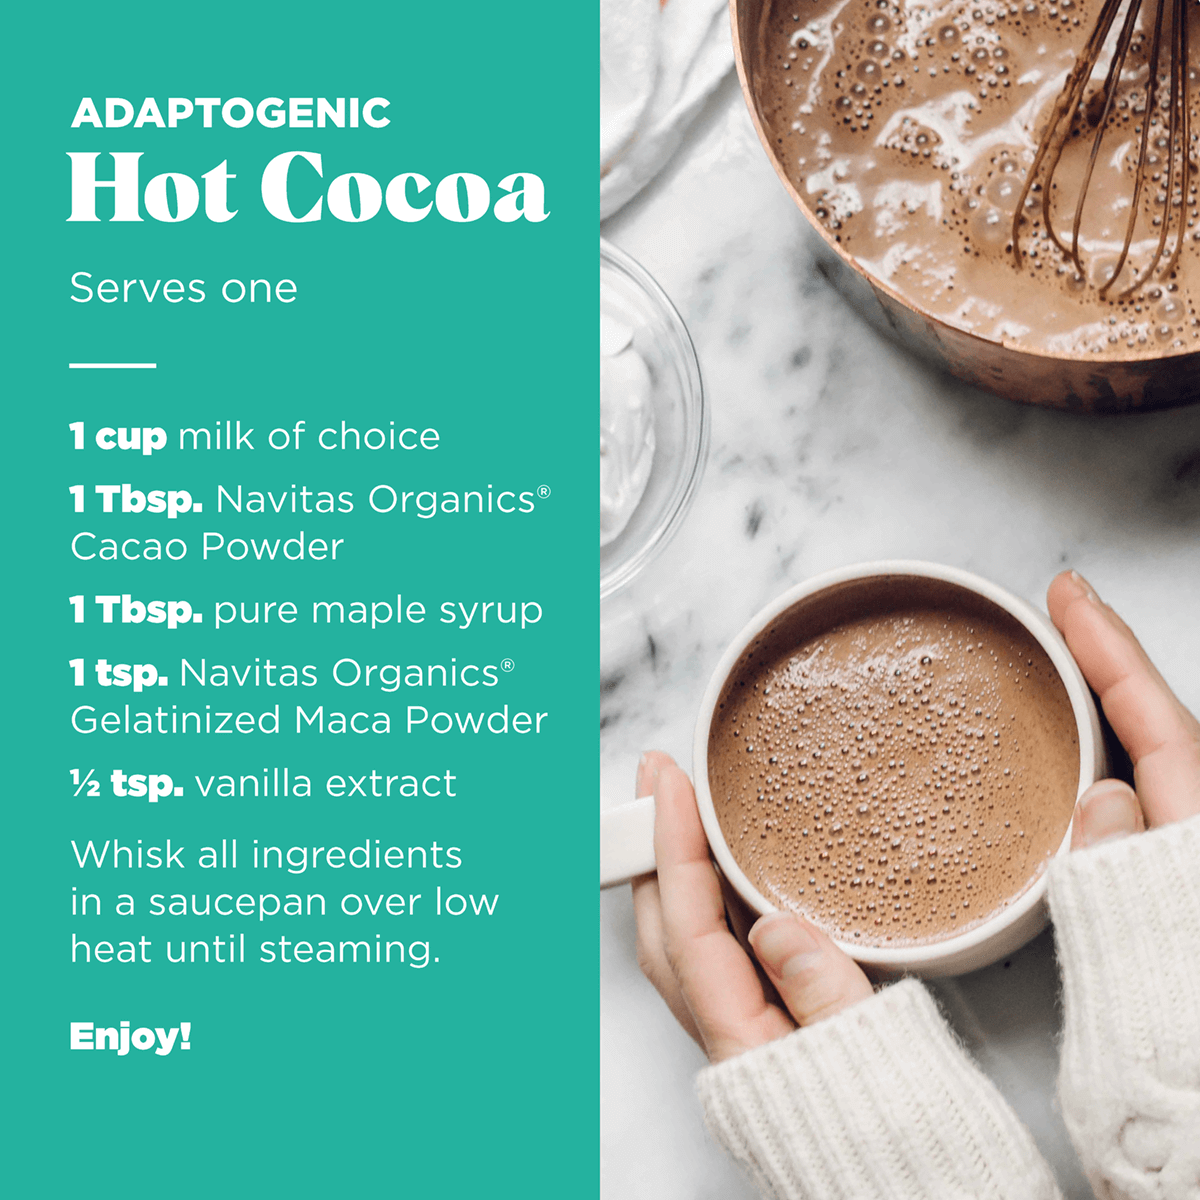 Adaptogenic Hot Cocoa recipe with Navitas Organics Cacao Powder and Gelatinized Maca Powder.